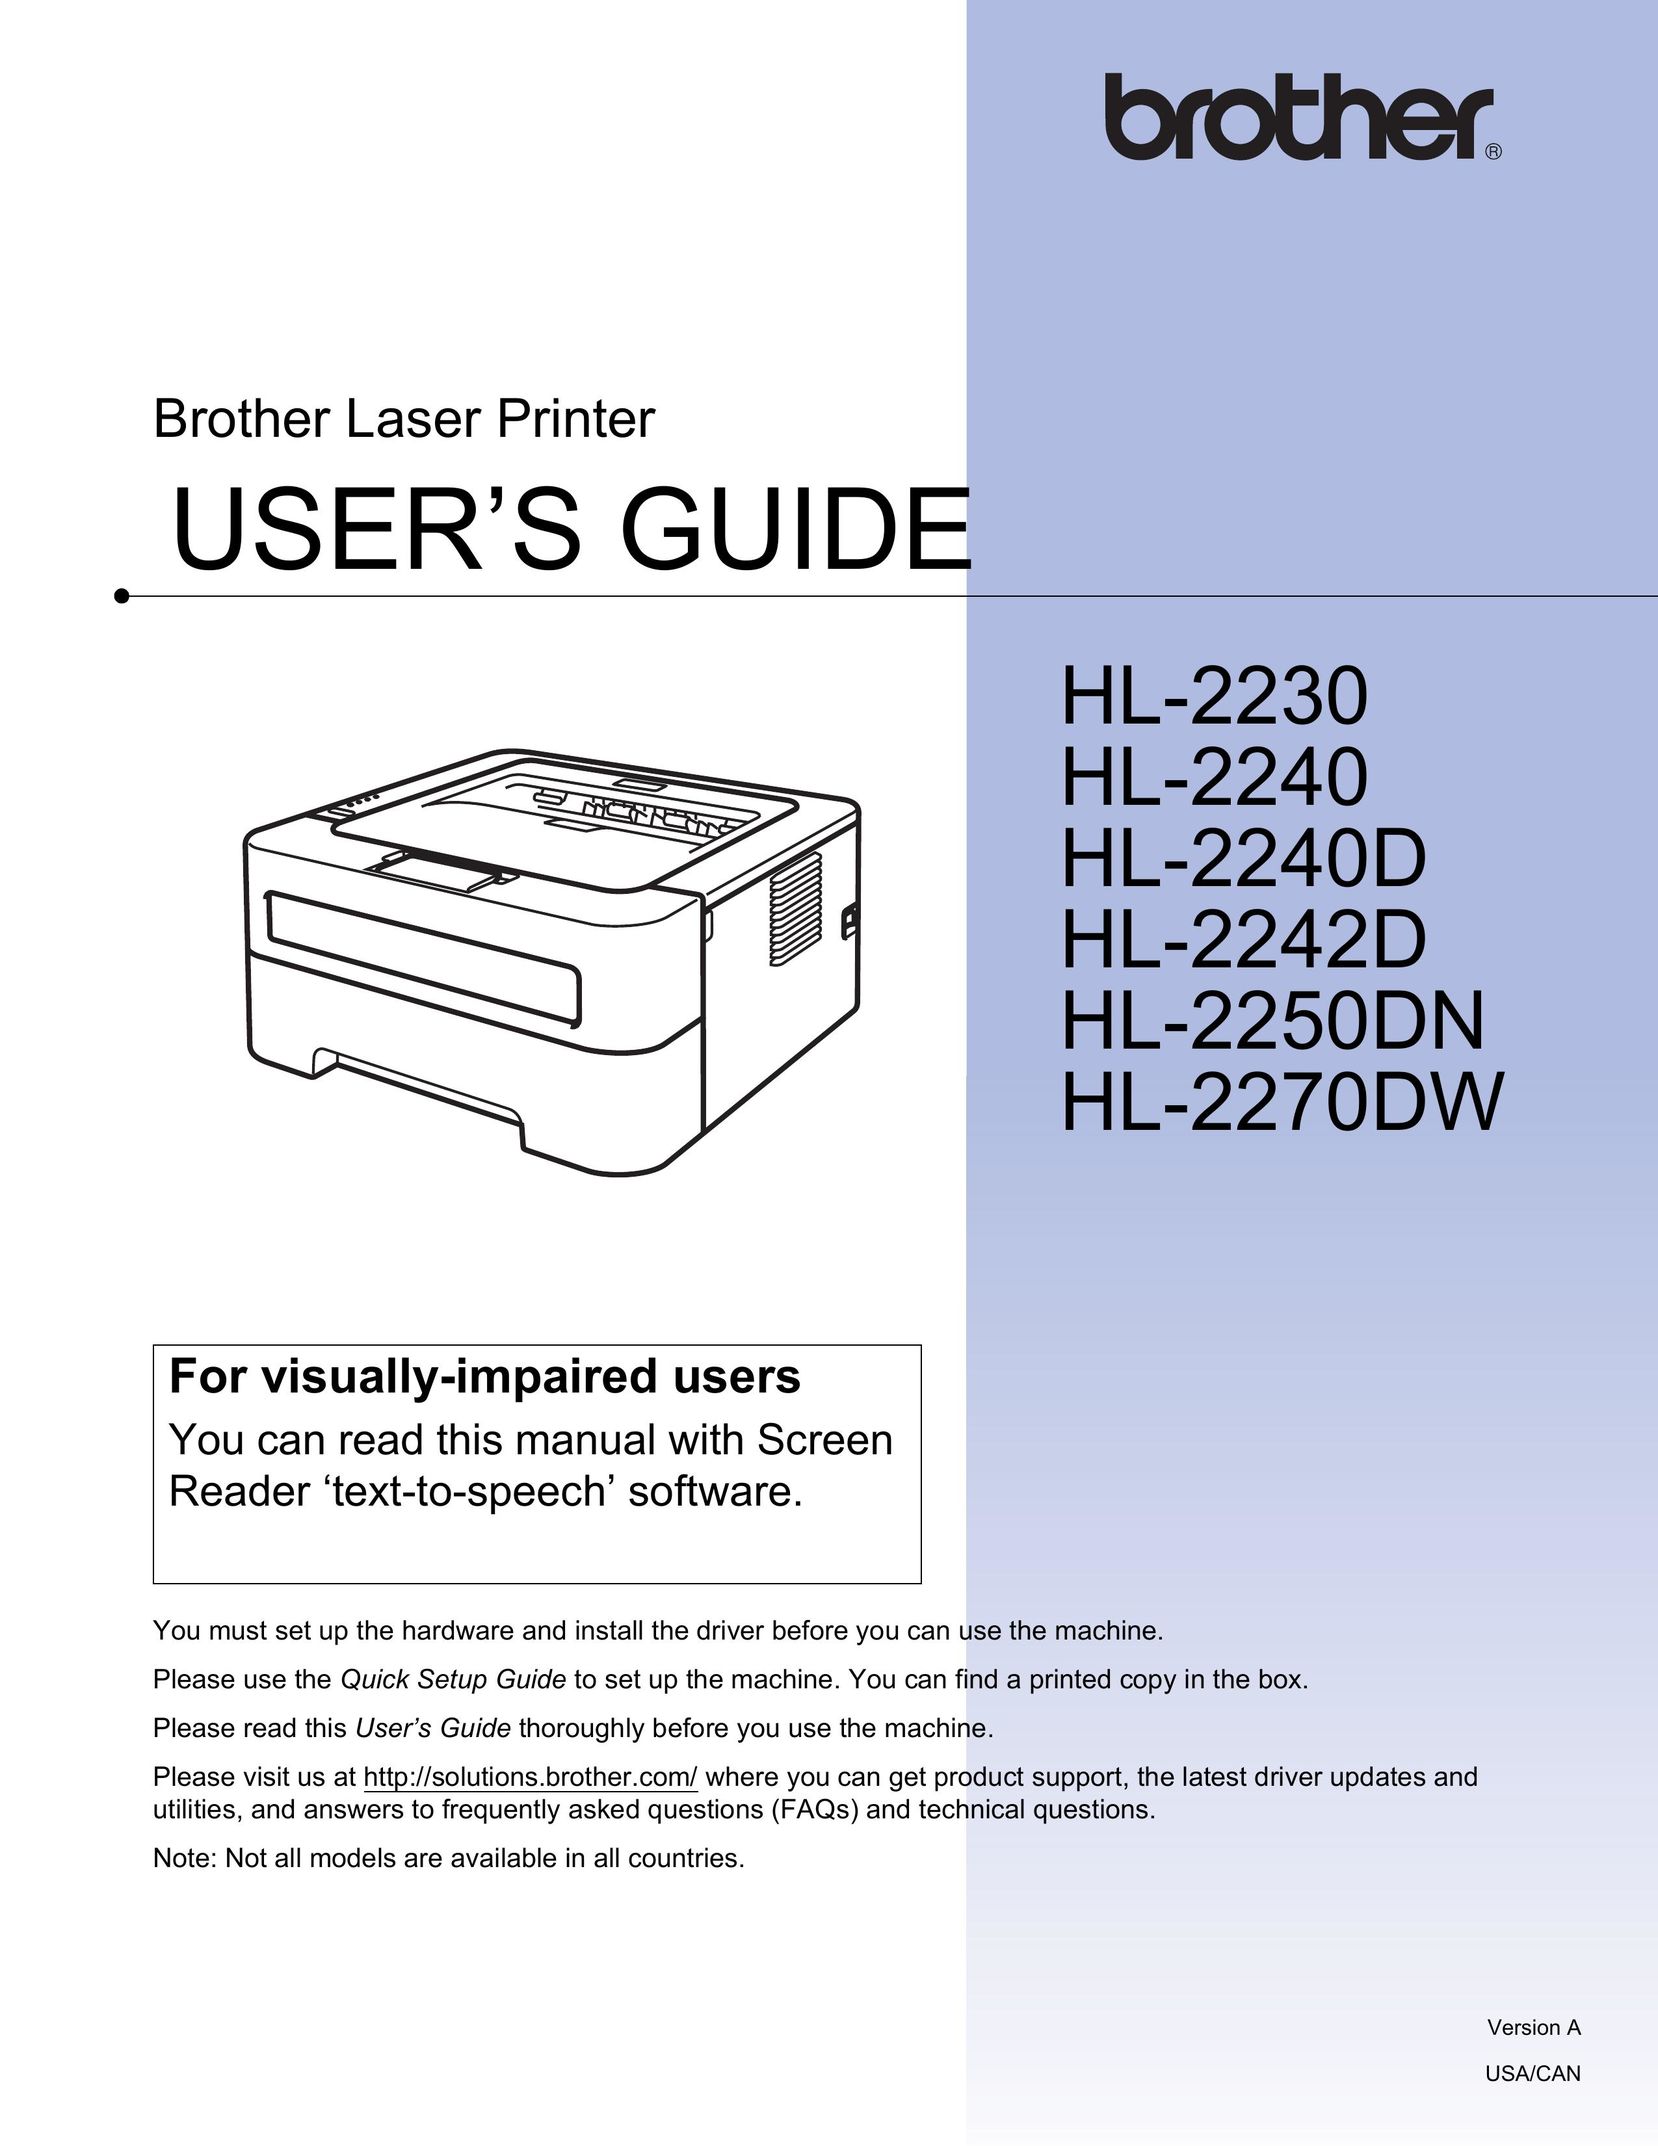 Brother 2240D Printer User Manual